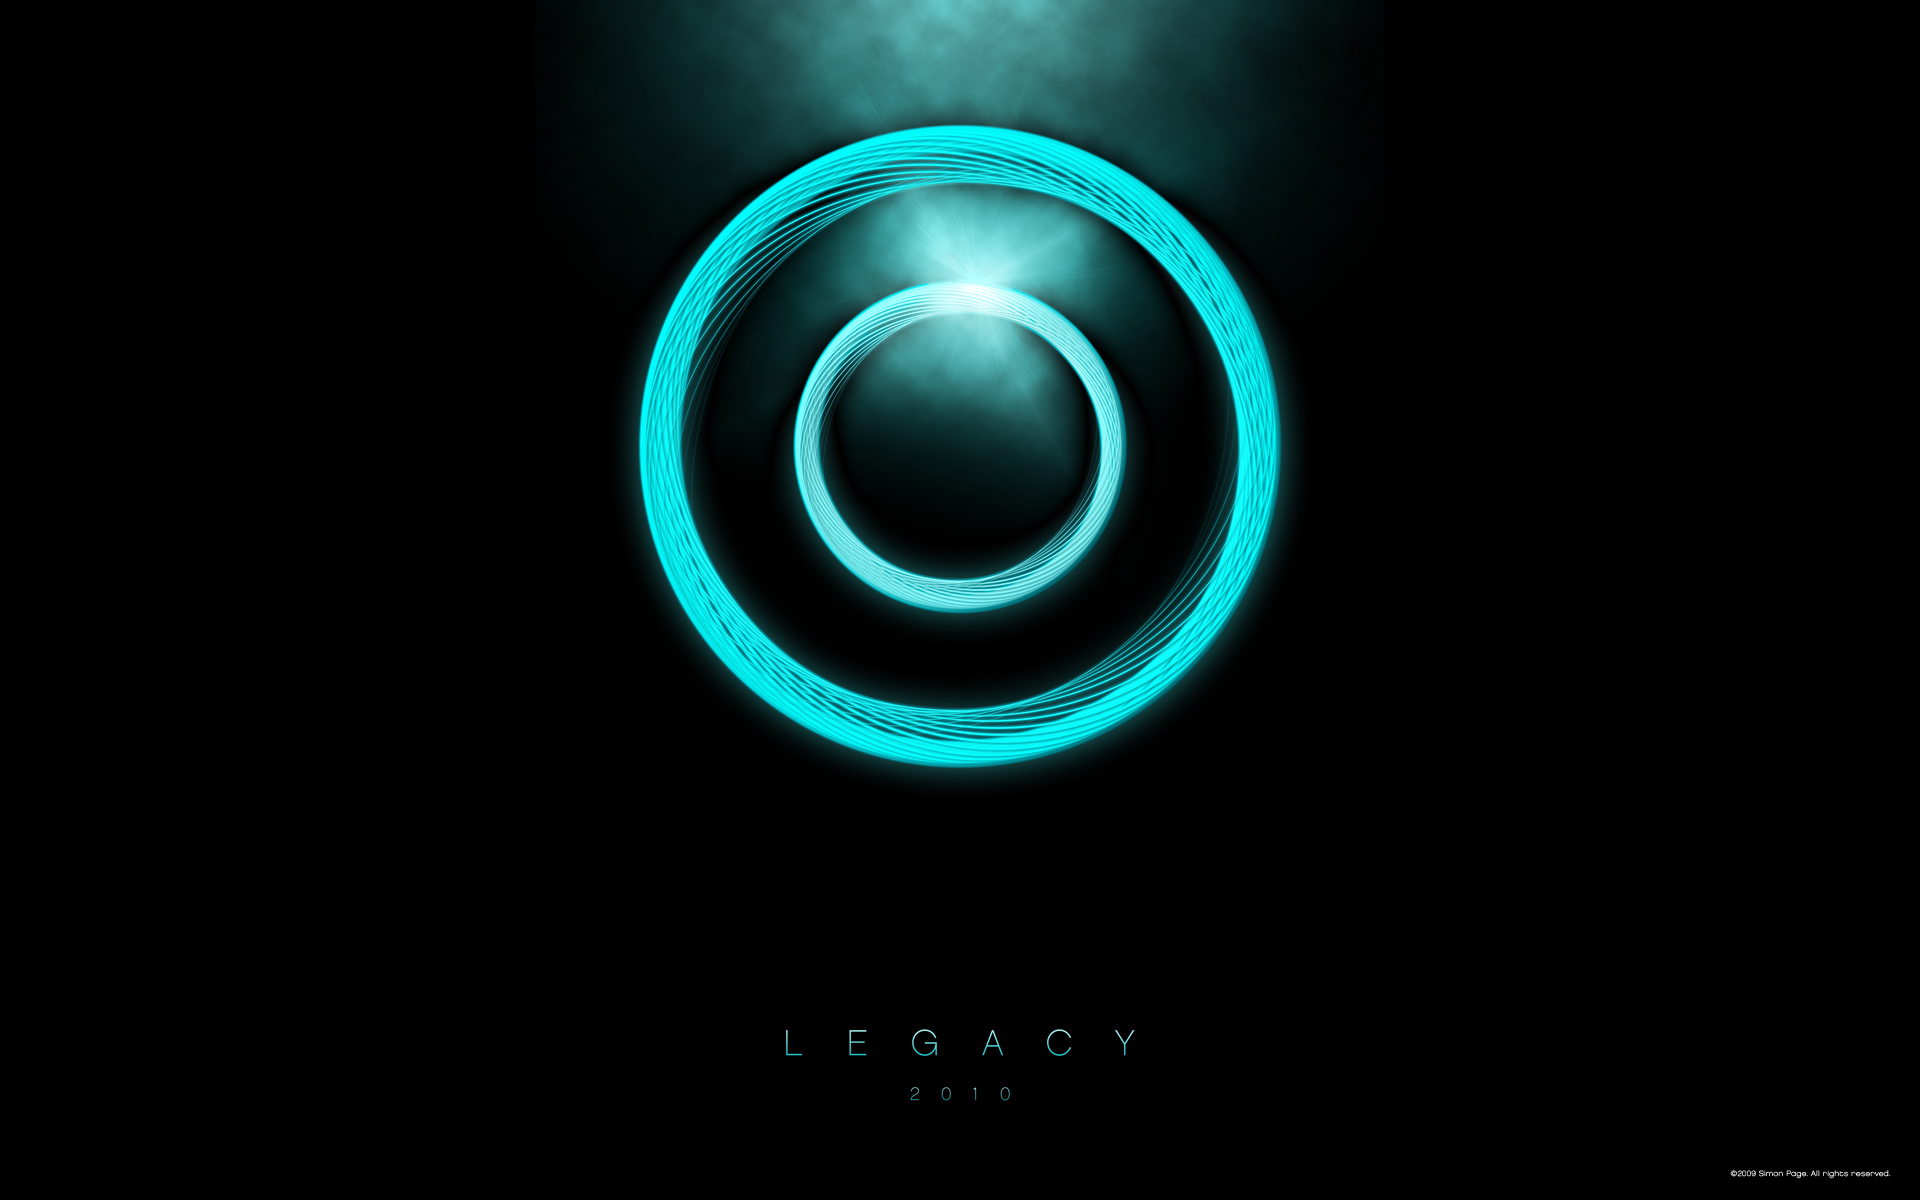 Tron Legacy Poster Design Elements Legacy Photo